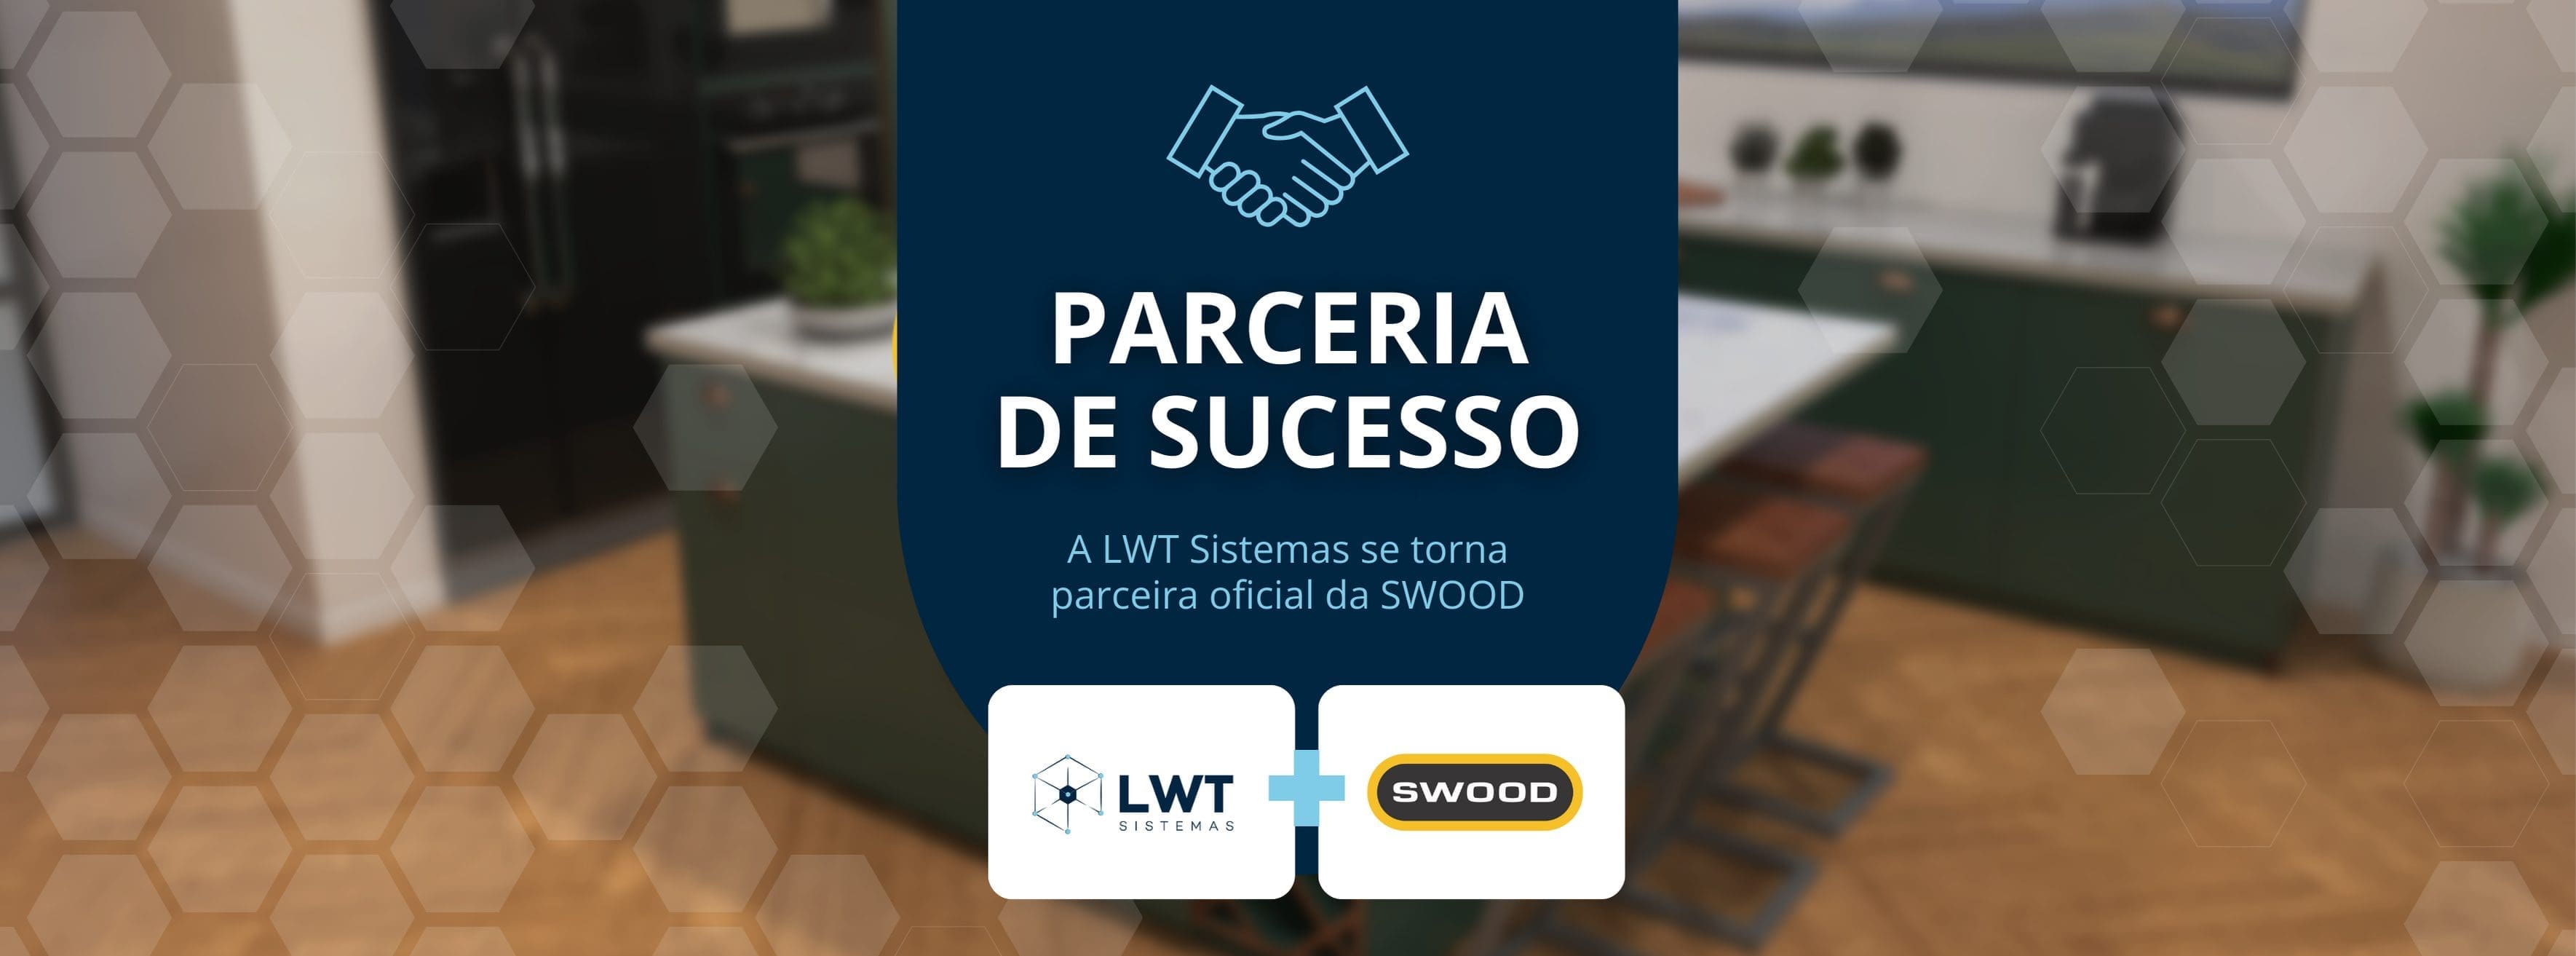 swood + lwt